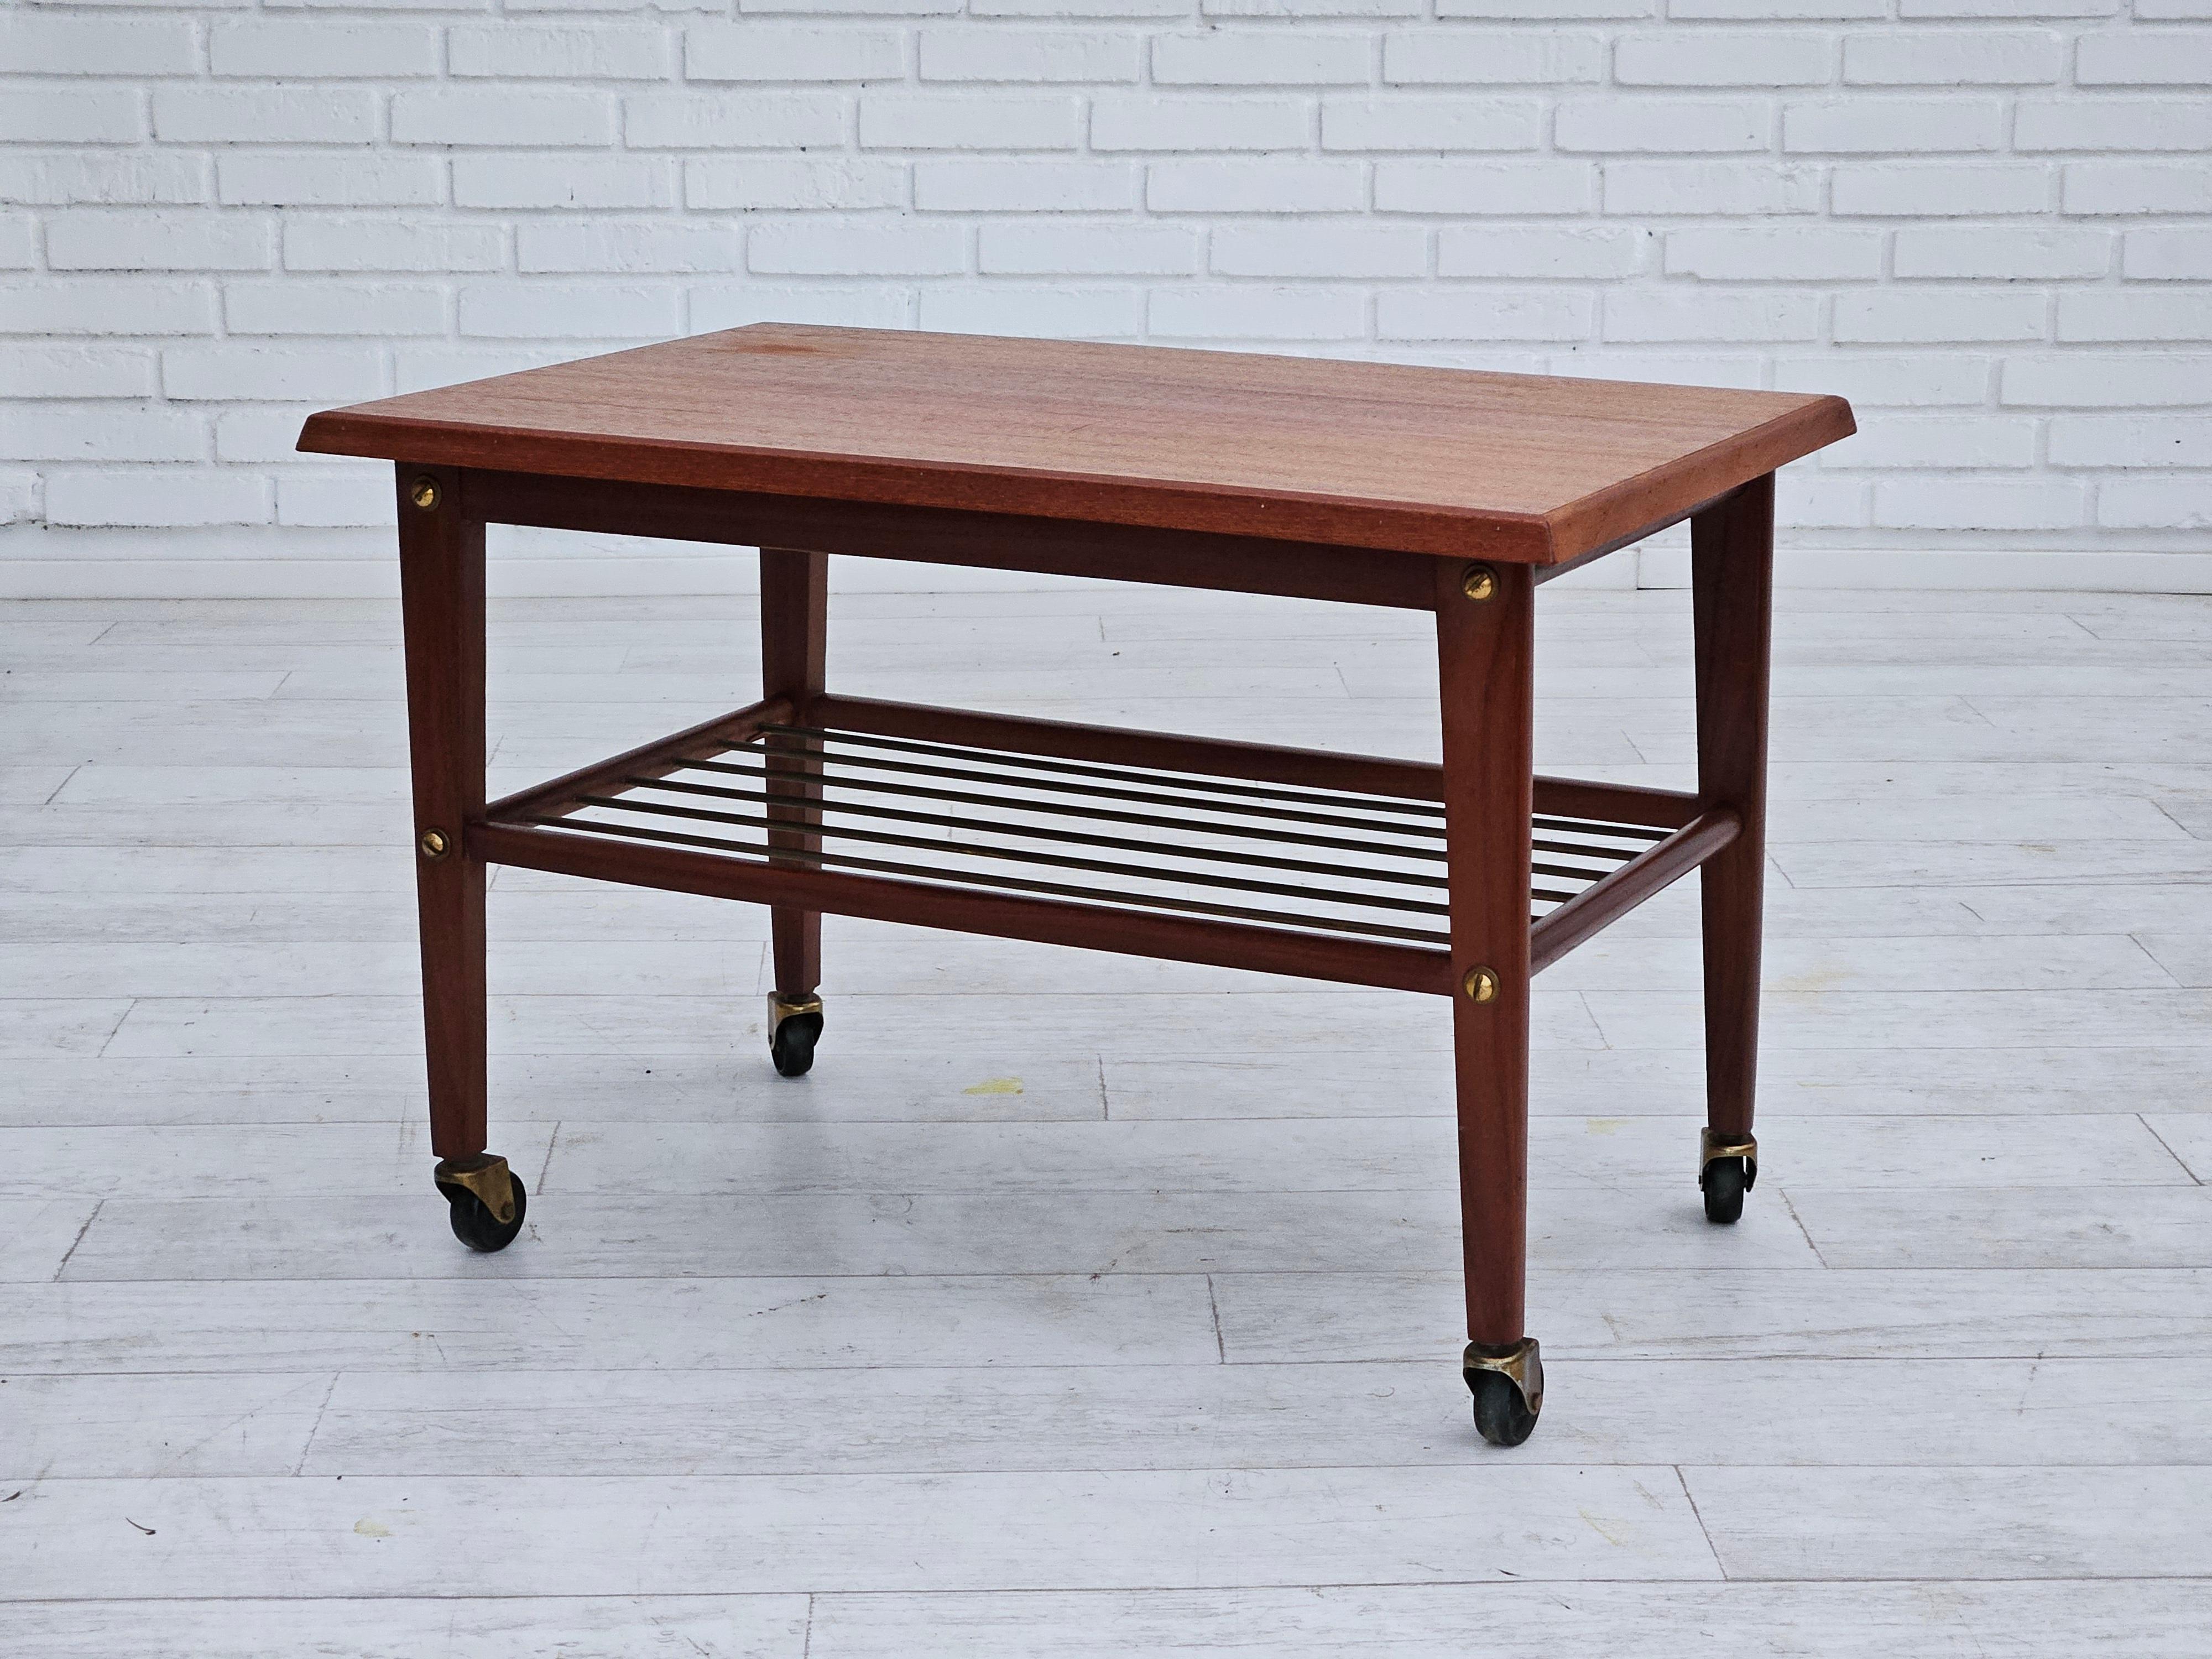 1970s, Danish coffee table on wheels. Teak wood, shelf with brass bars. Original good condition.